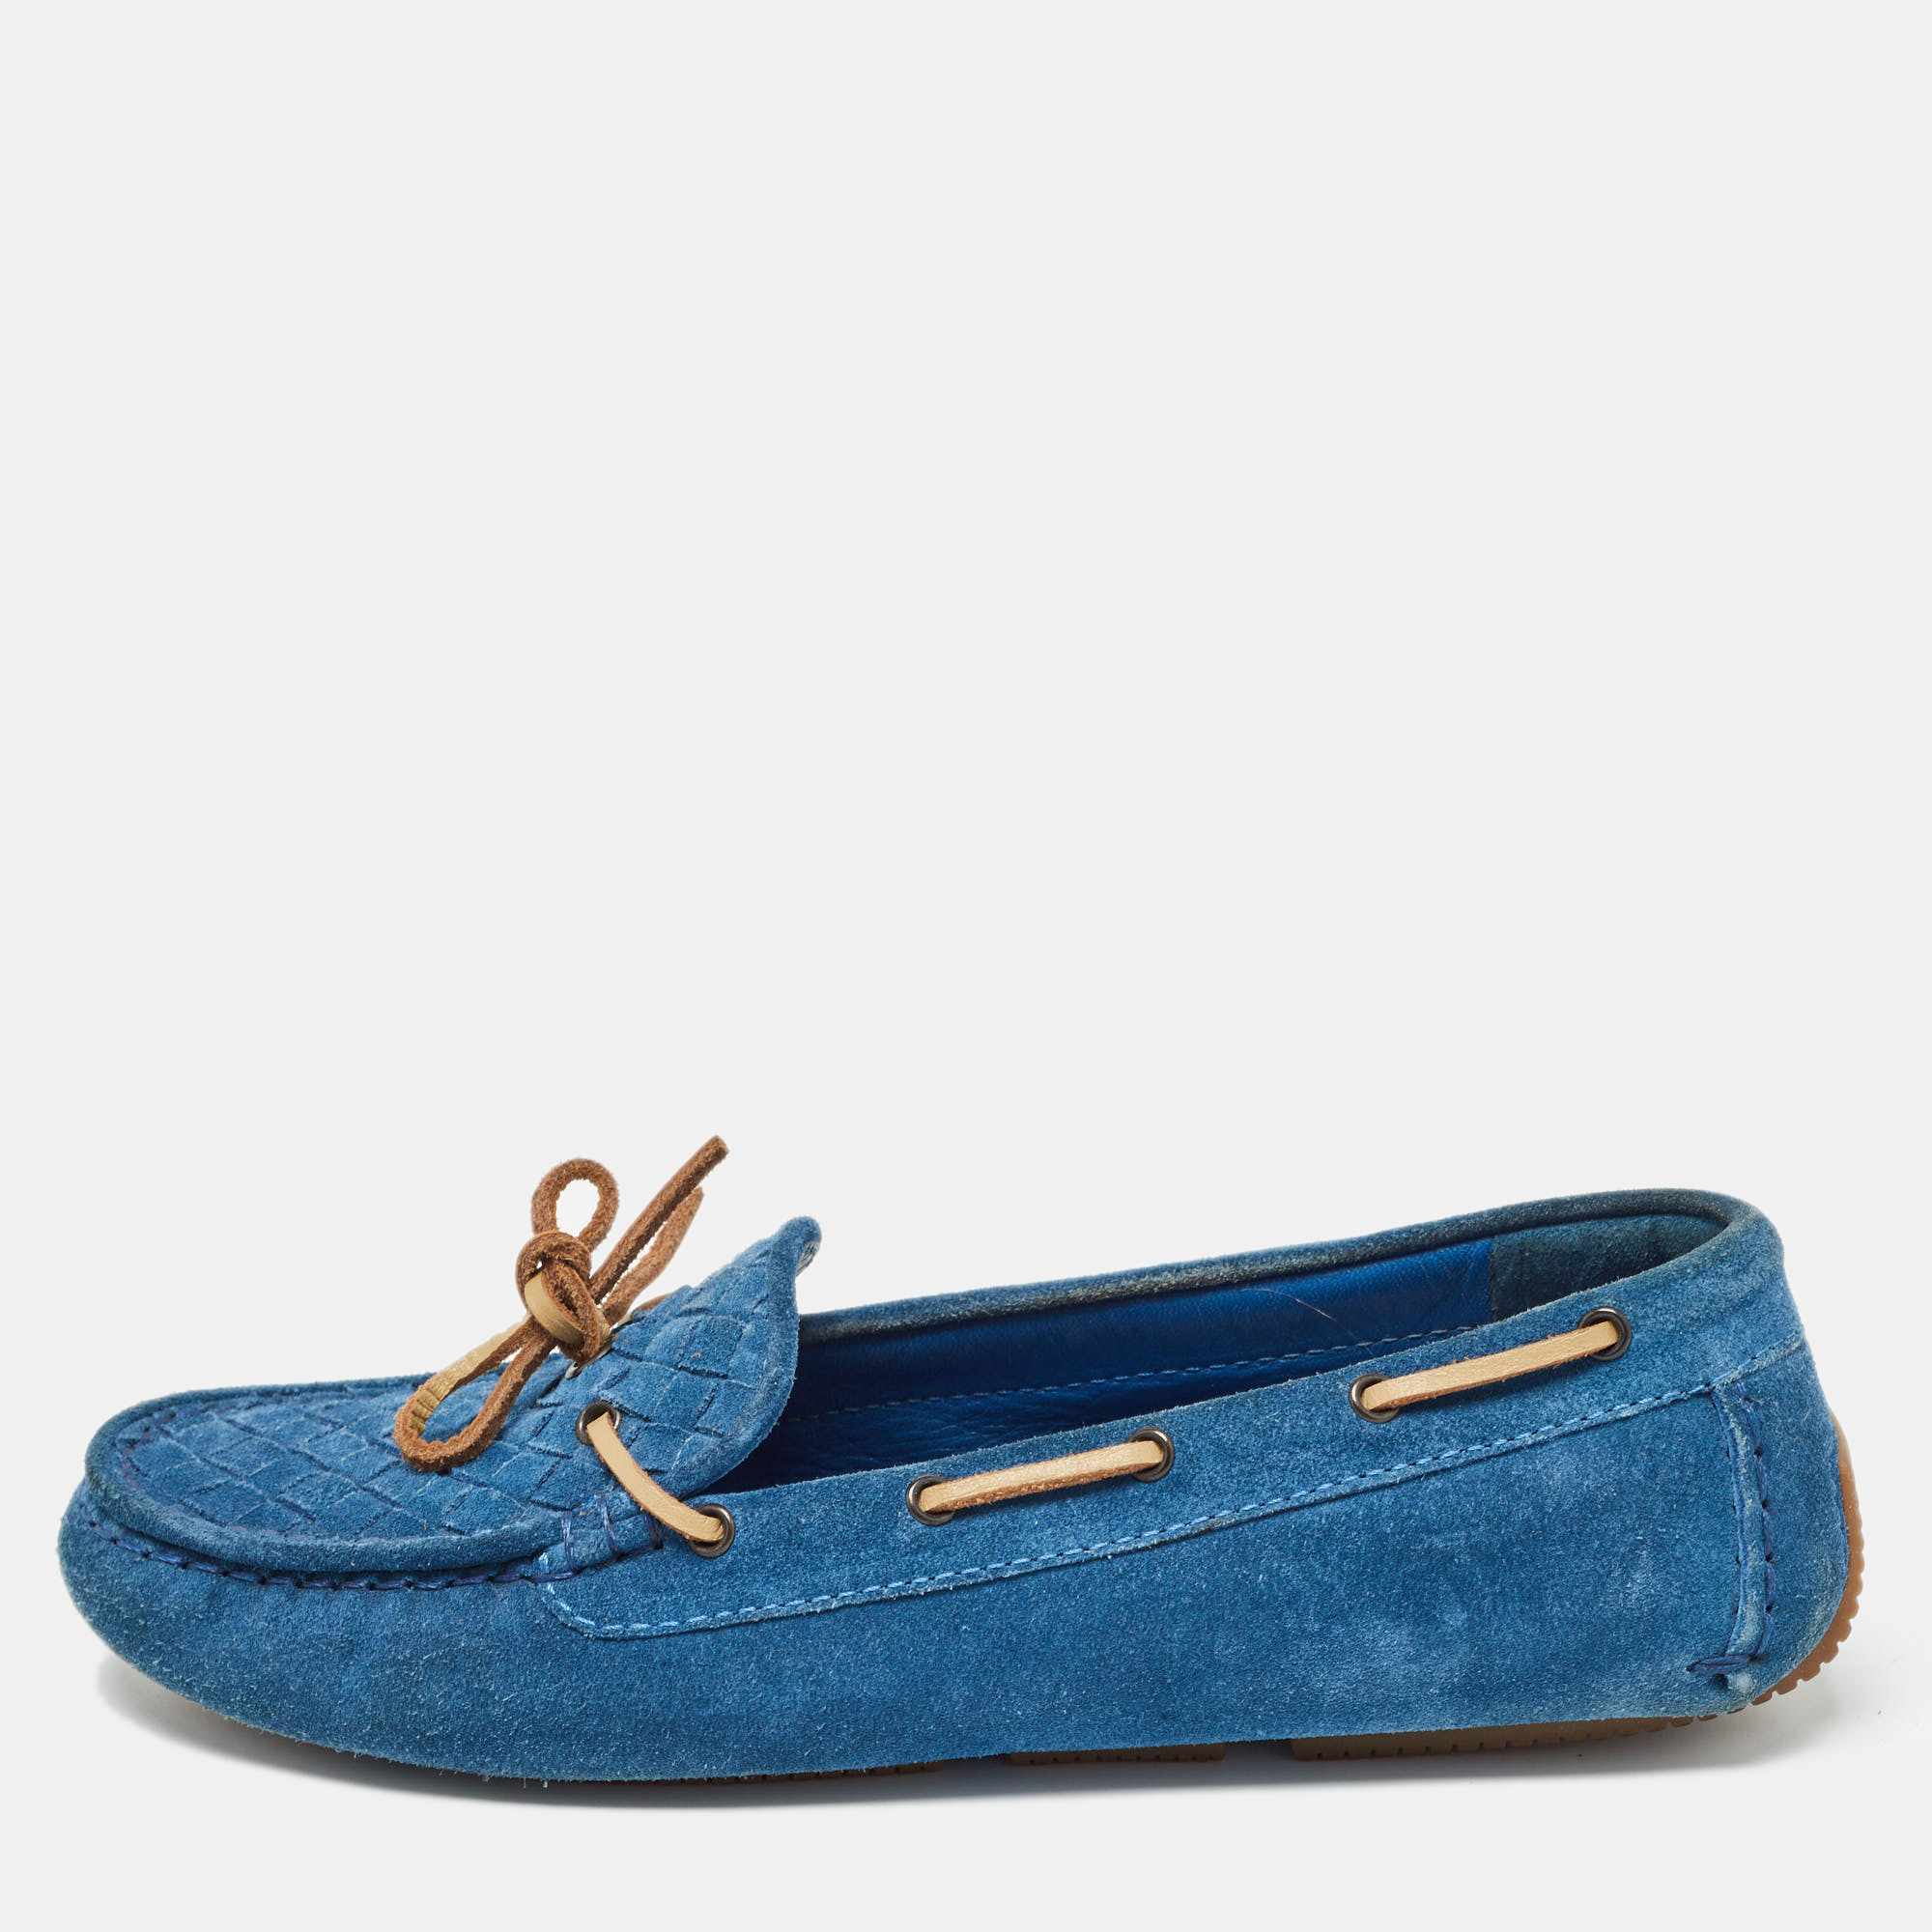 Bottega veneta blue intrecciato suede bow slip on loafers size 36